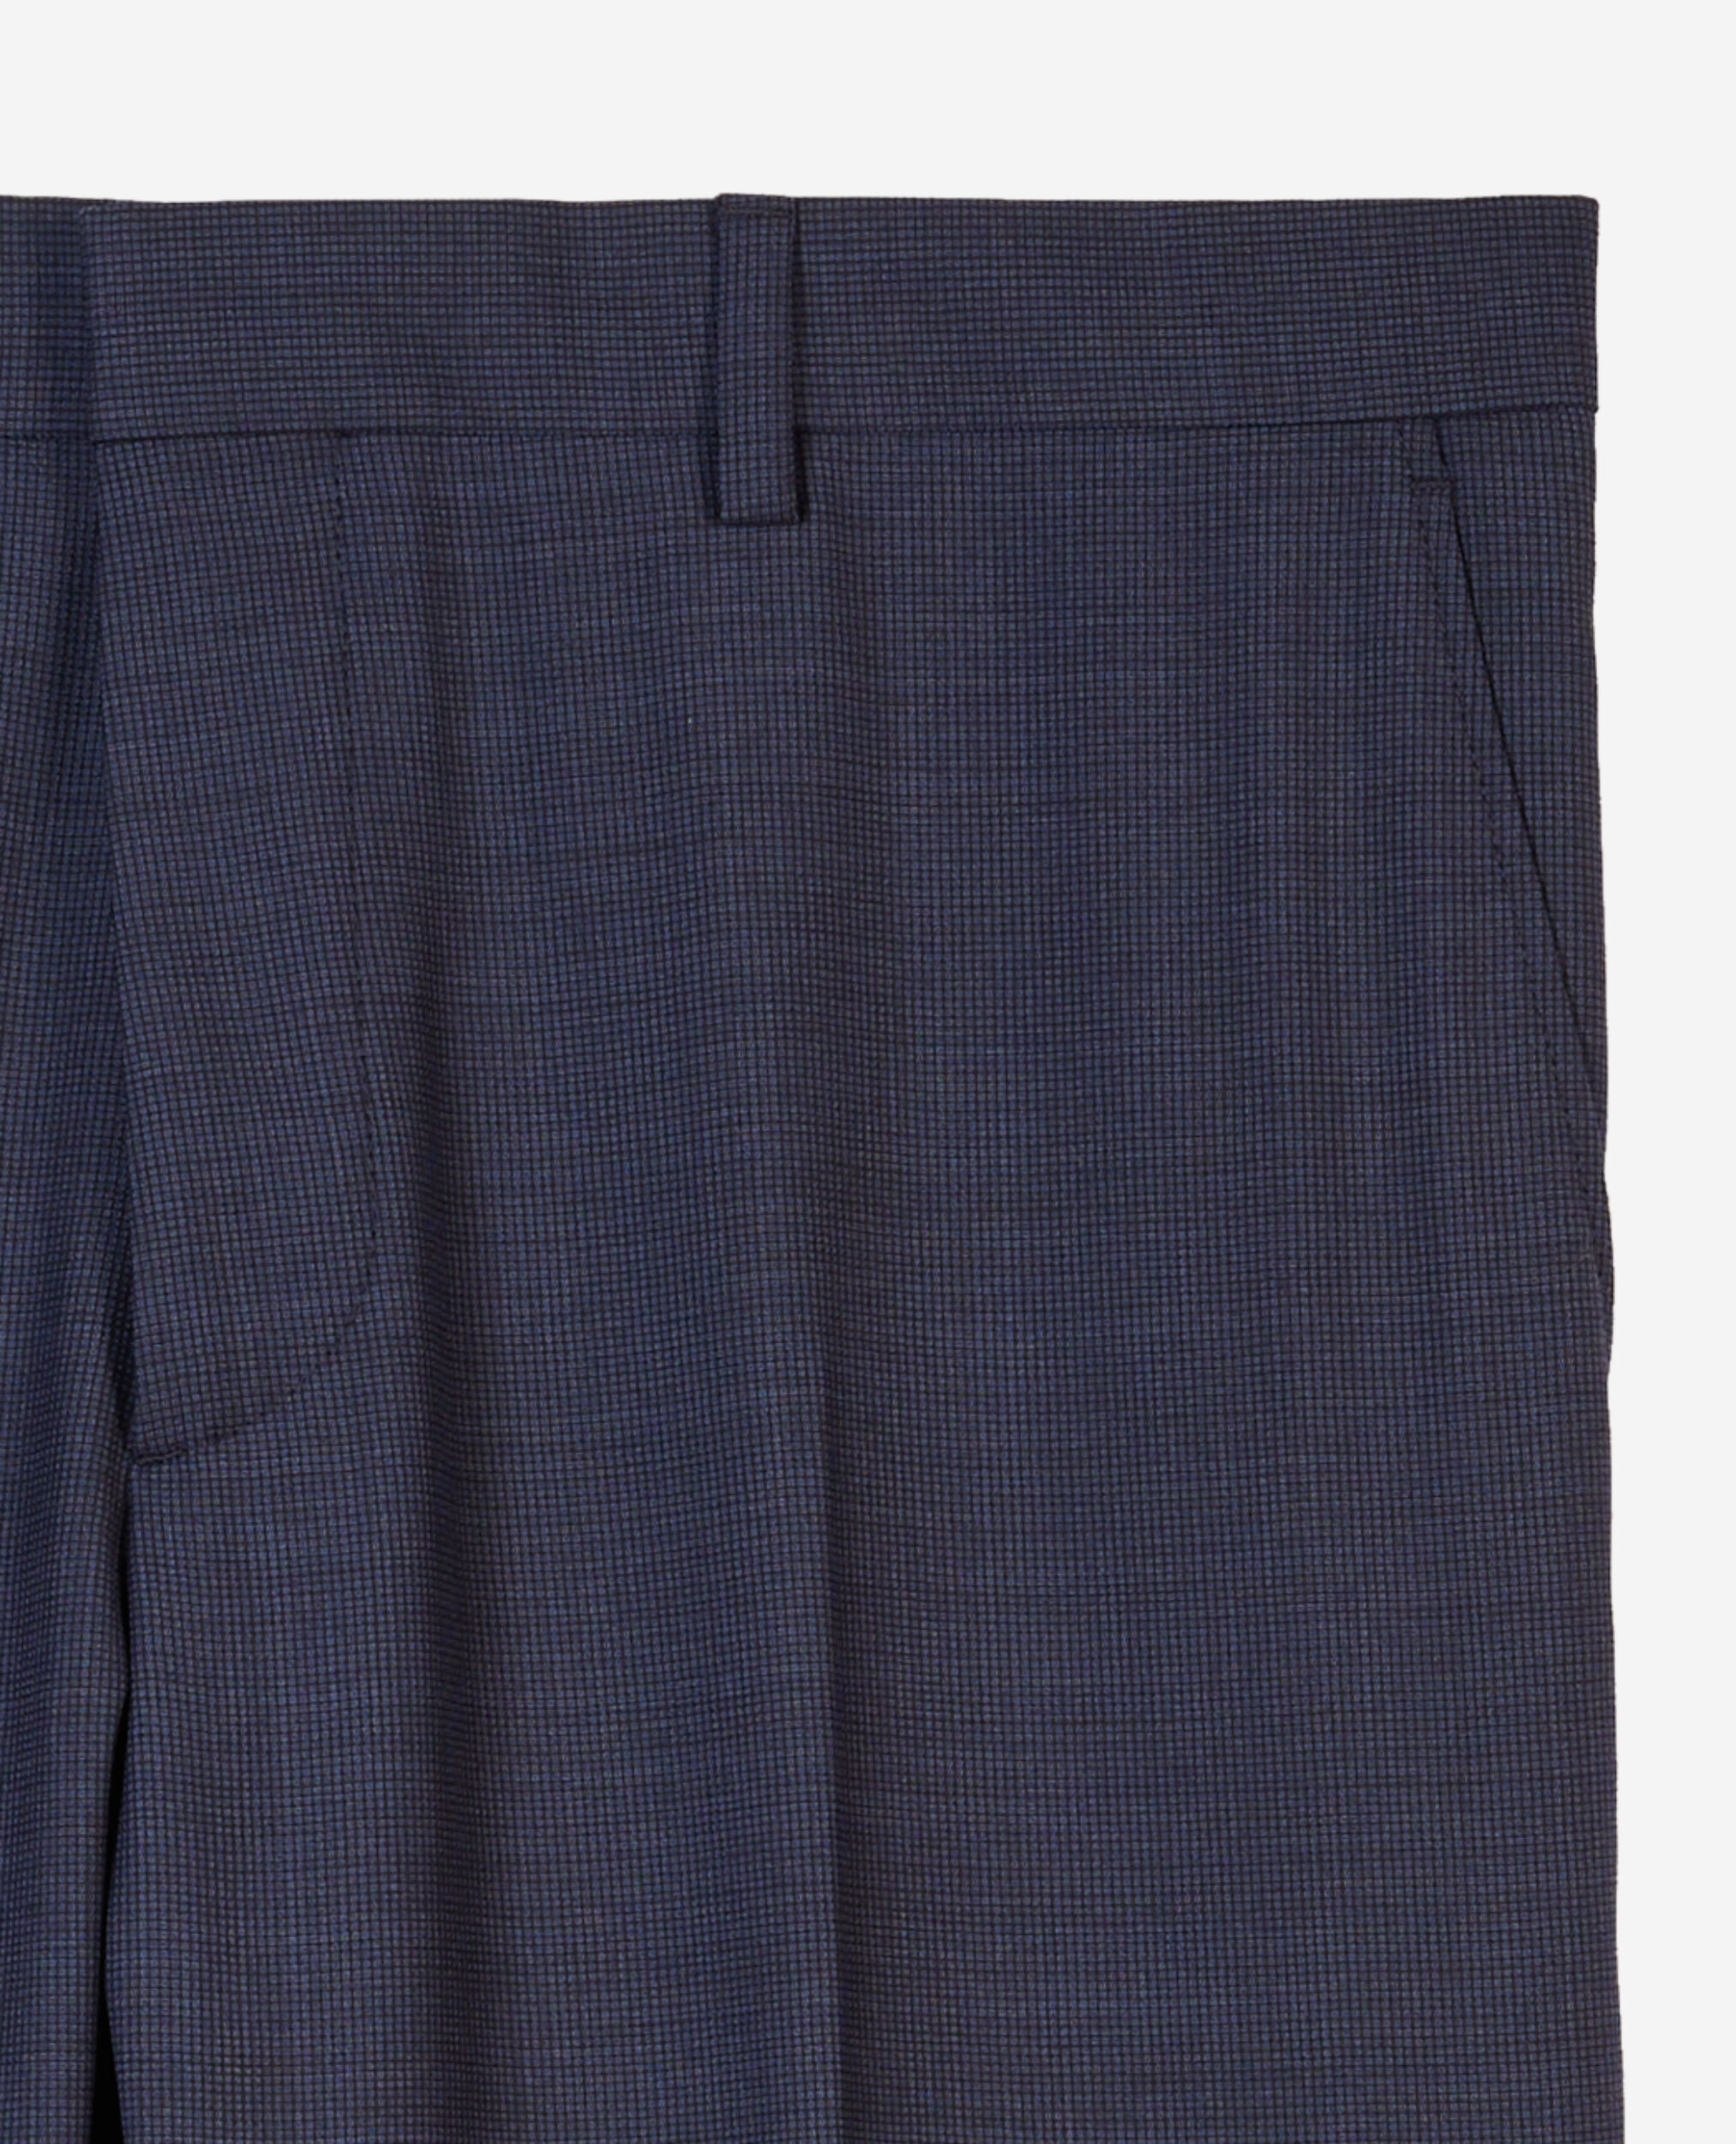 Pantalón traje microcuadros azul marino lana, NAVY, hi-res image number null